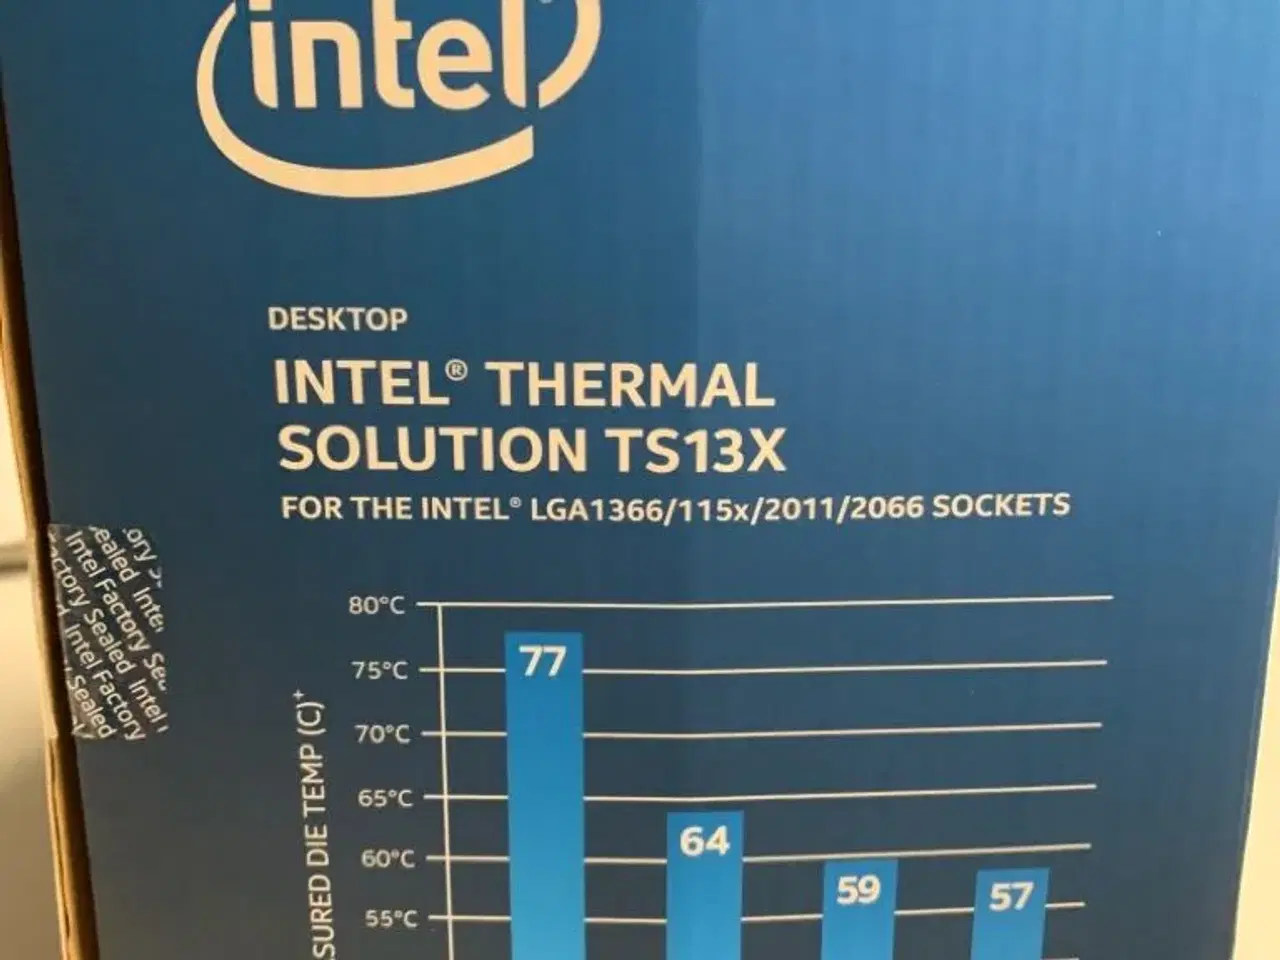 Billede 2 - NY! Intel vandkøler